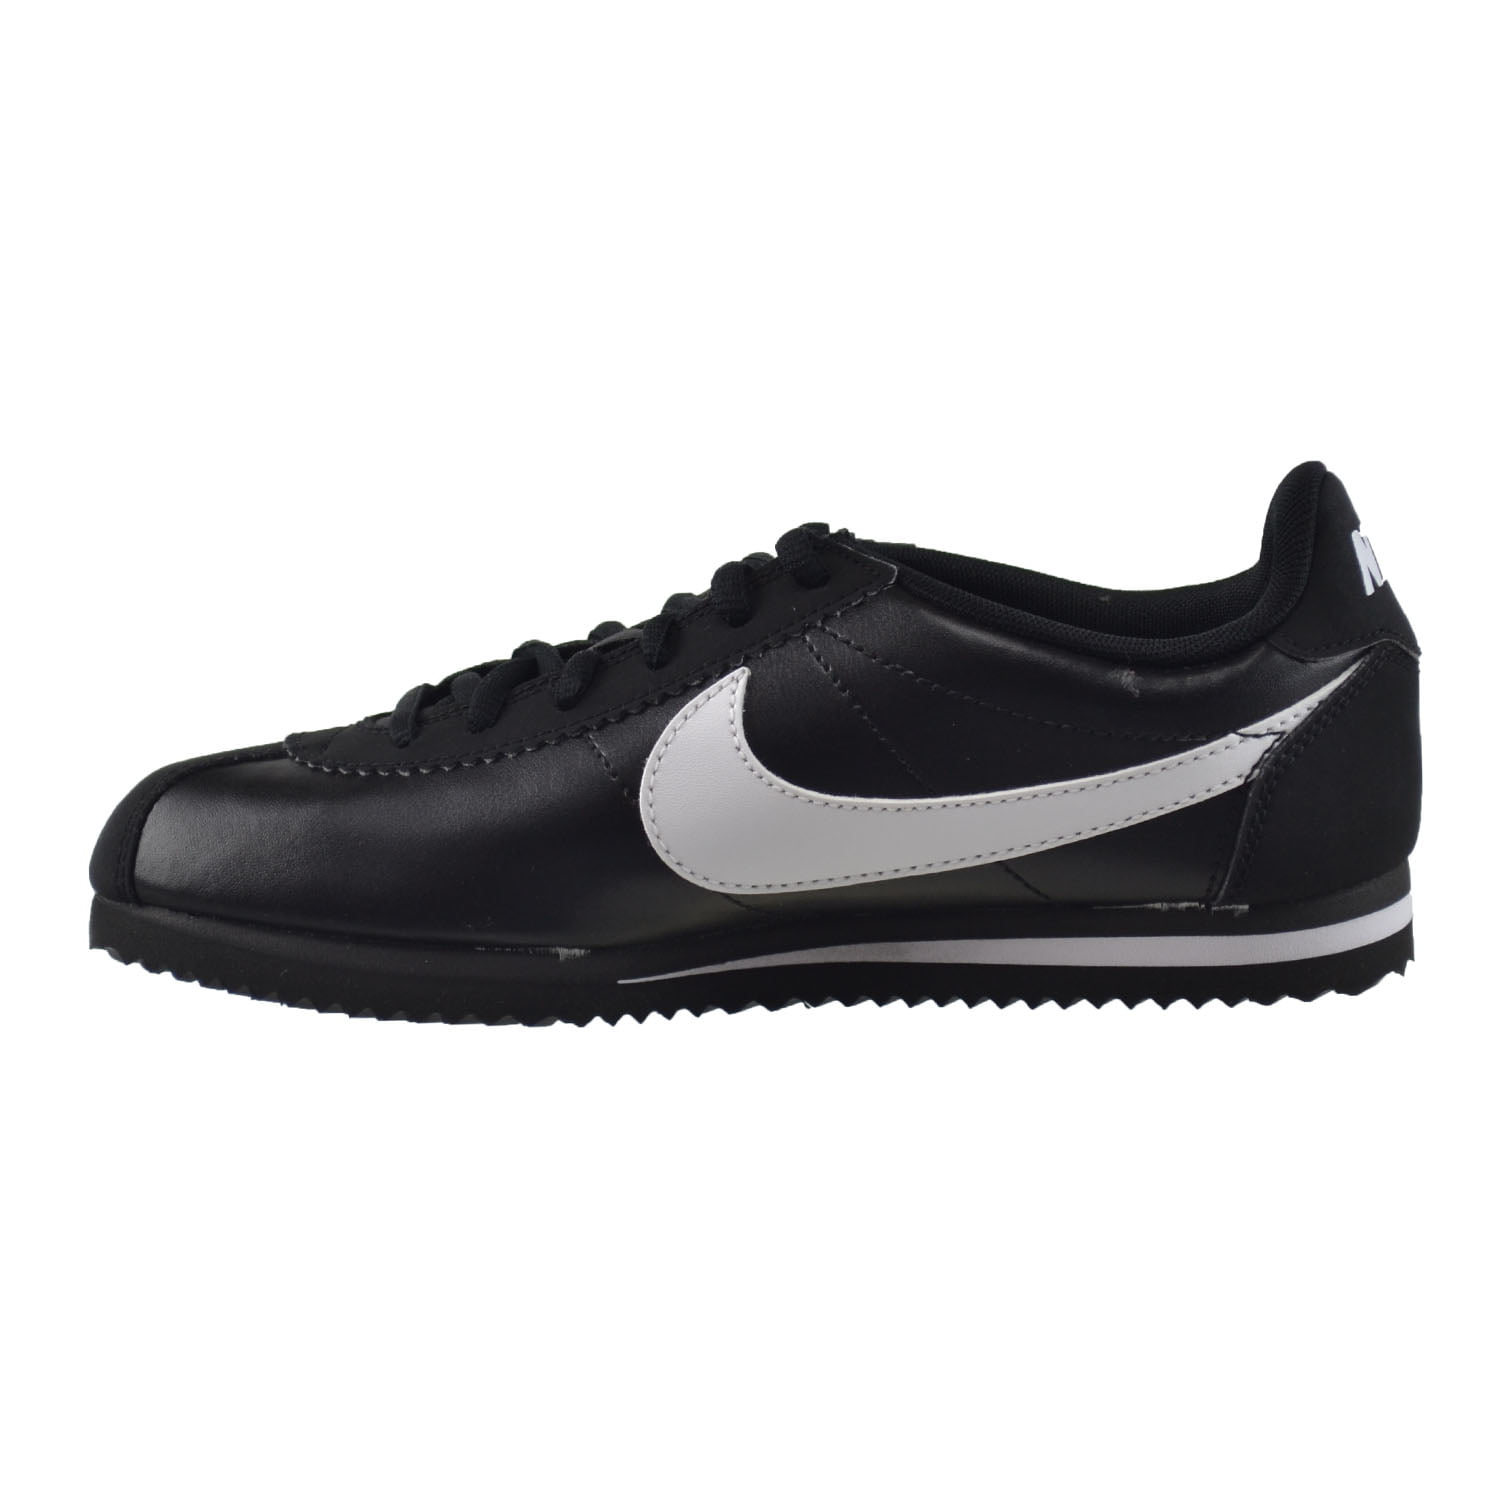 Nike Cortez (GS) Big Kid's Shoes White/Pink Blast 749502-106 (4.5